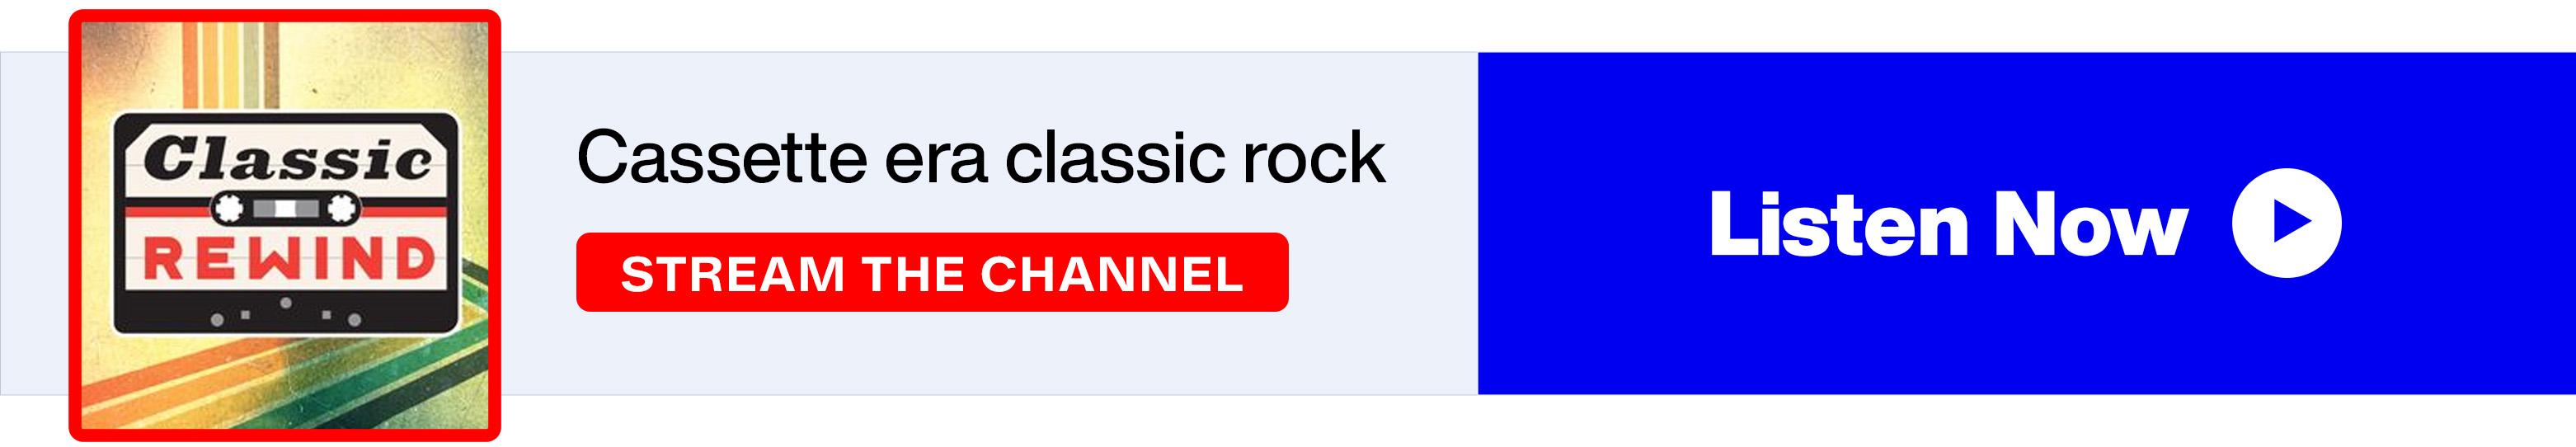 SiriusXM Classic Rewind - Cassette era classic rock - Stream the Channel - Listen Now banner